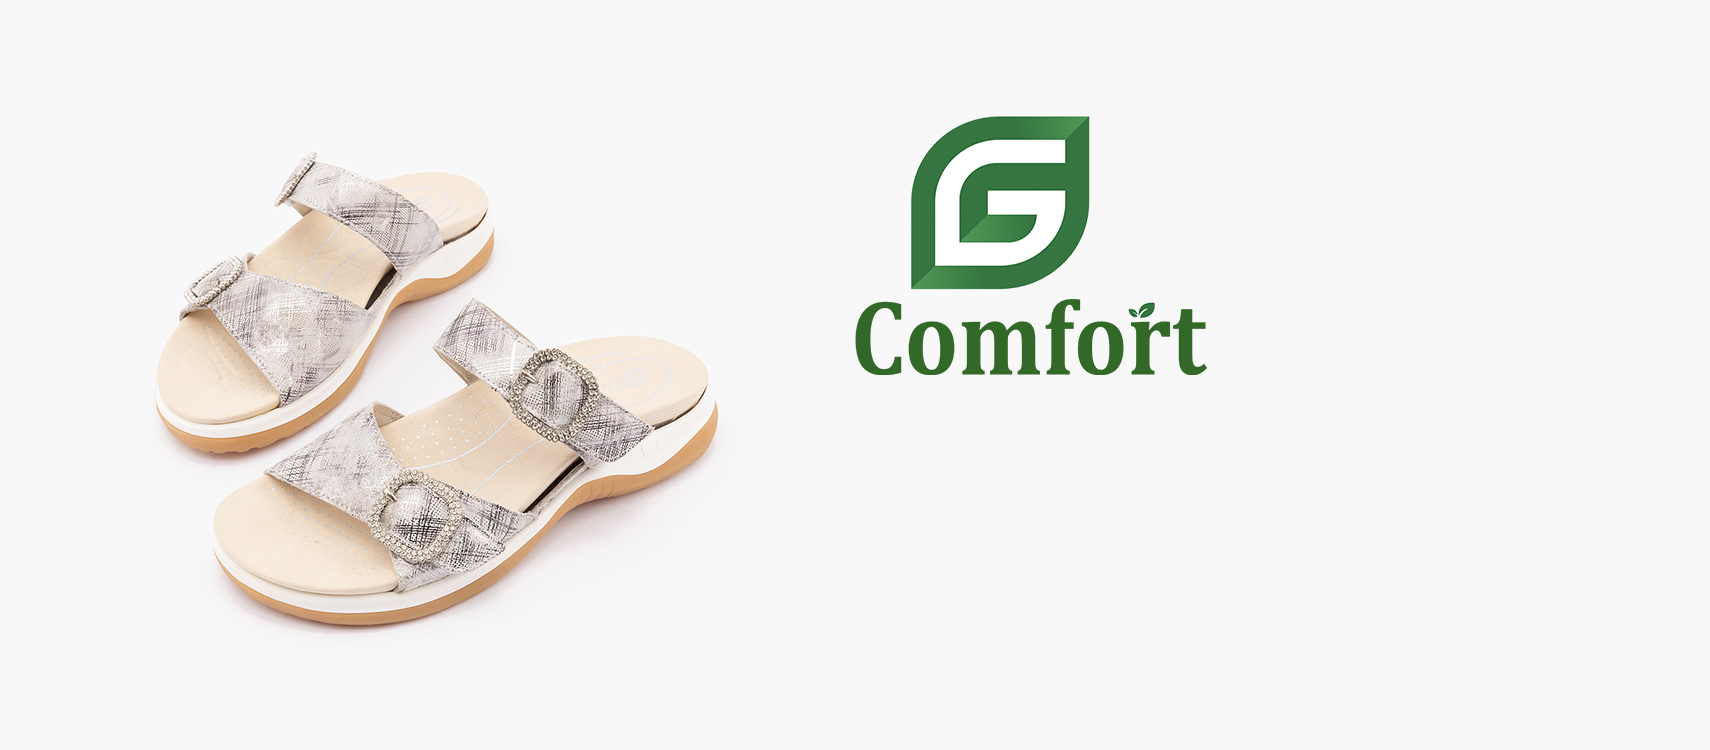 G Comfort Shoes